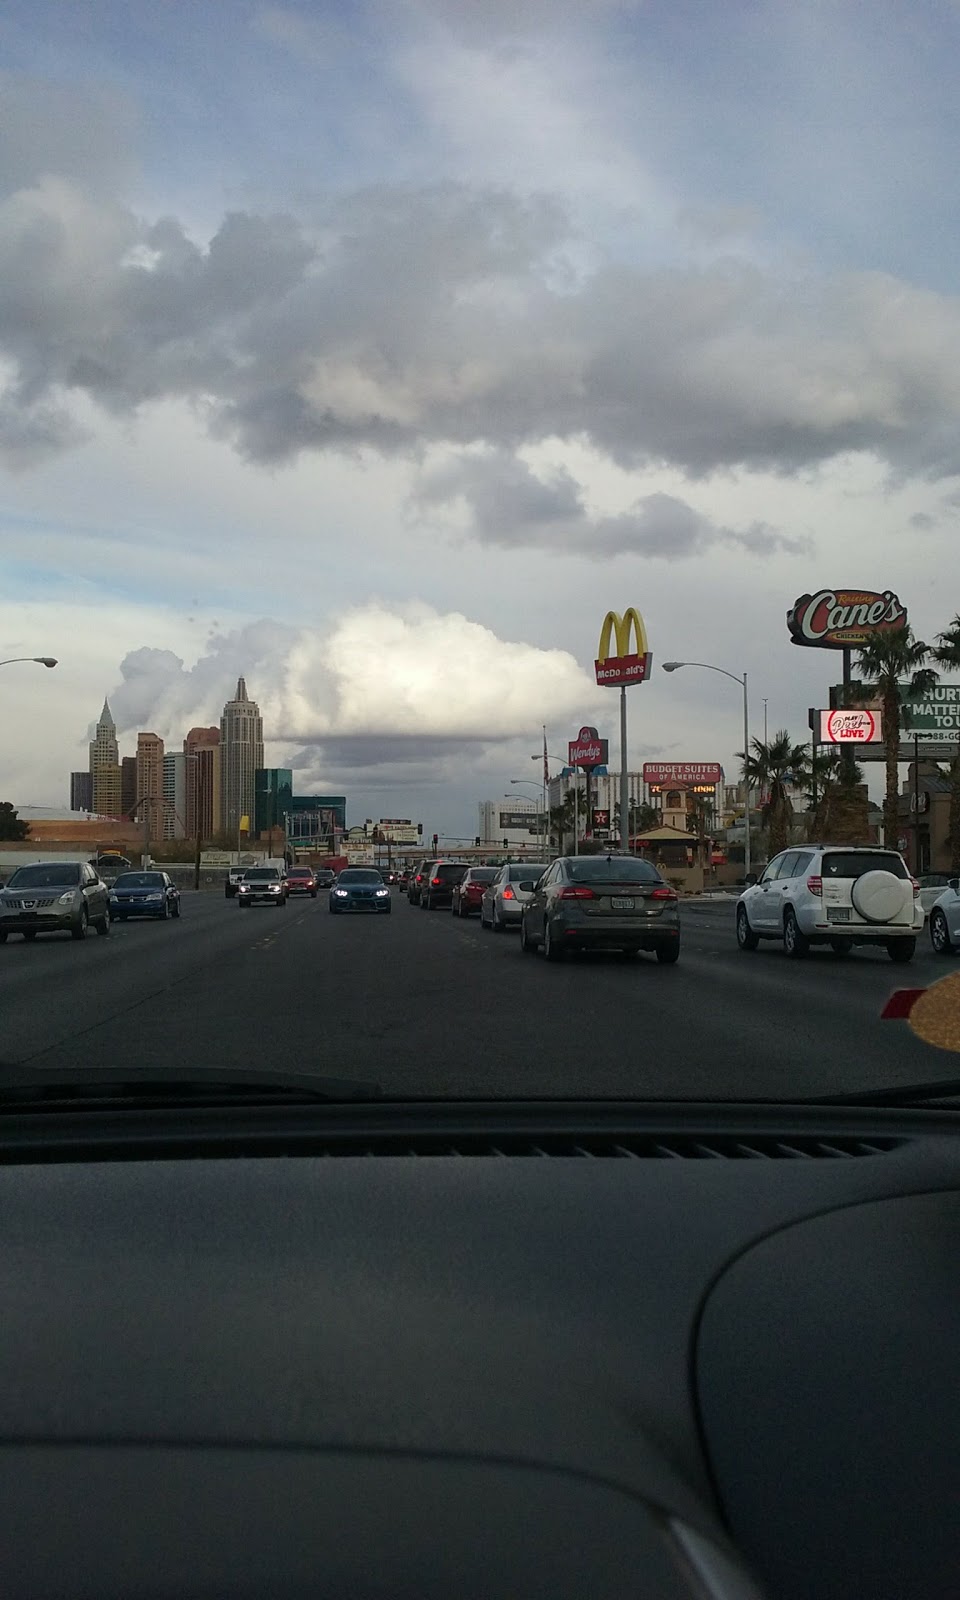 Burger King | 3620 W Tropicana Ave, Las Vegas, NV 89103 | Phone: (702) 798-4364